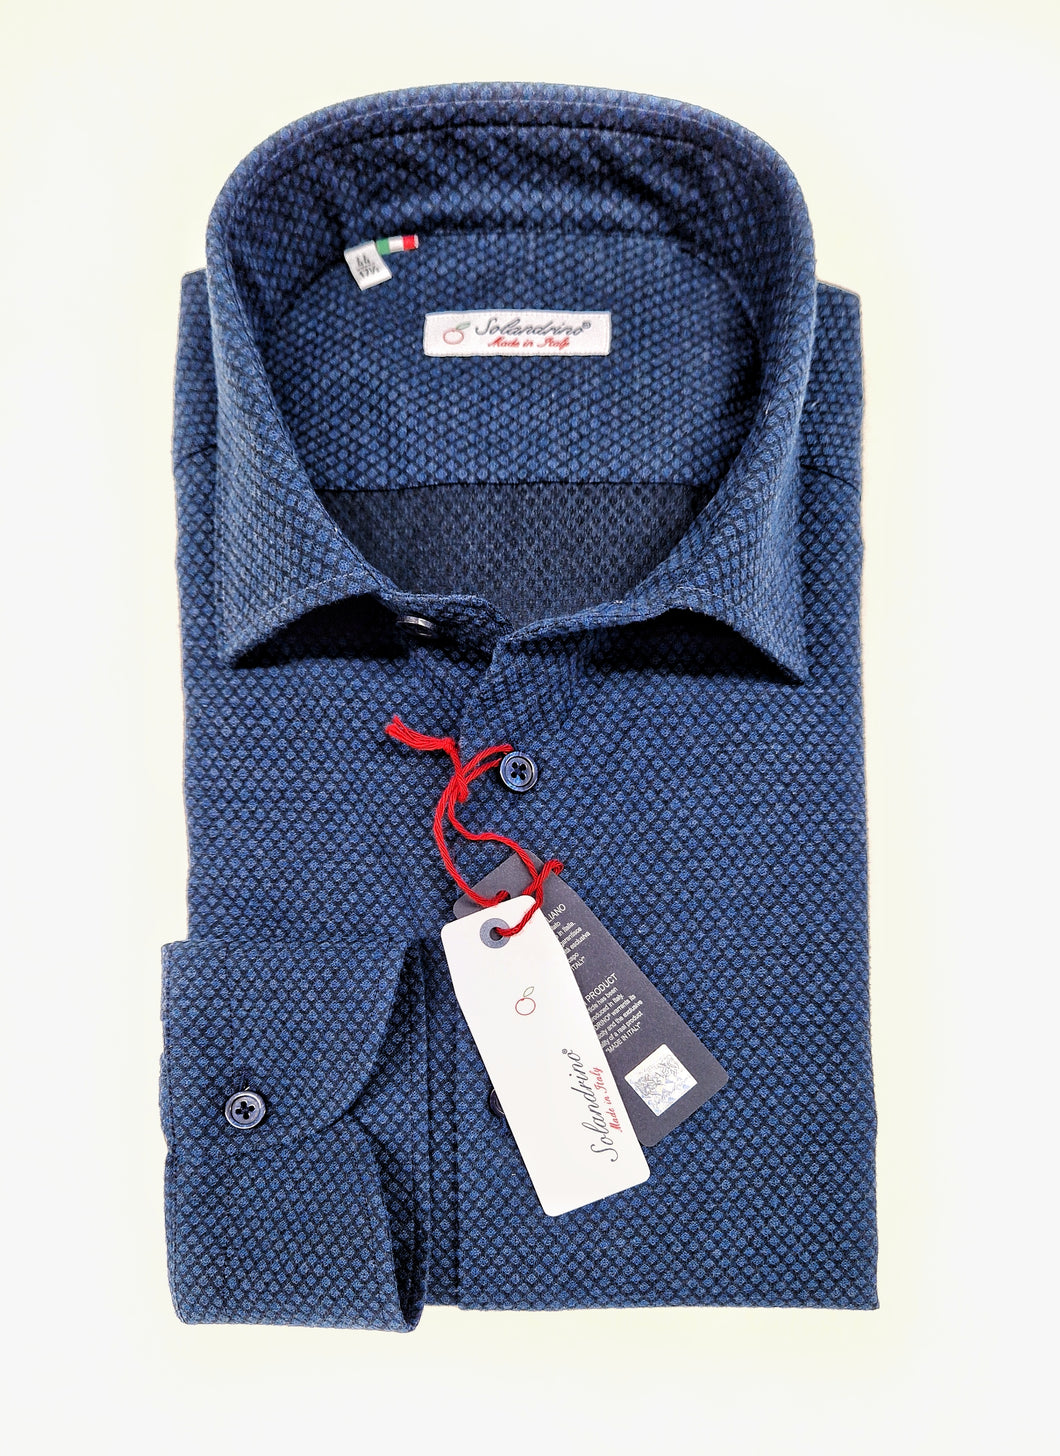 Camicia uomo jeans blu denim FANTASIA FASHION  puro cotone made in Italy Blue Navy shirt